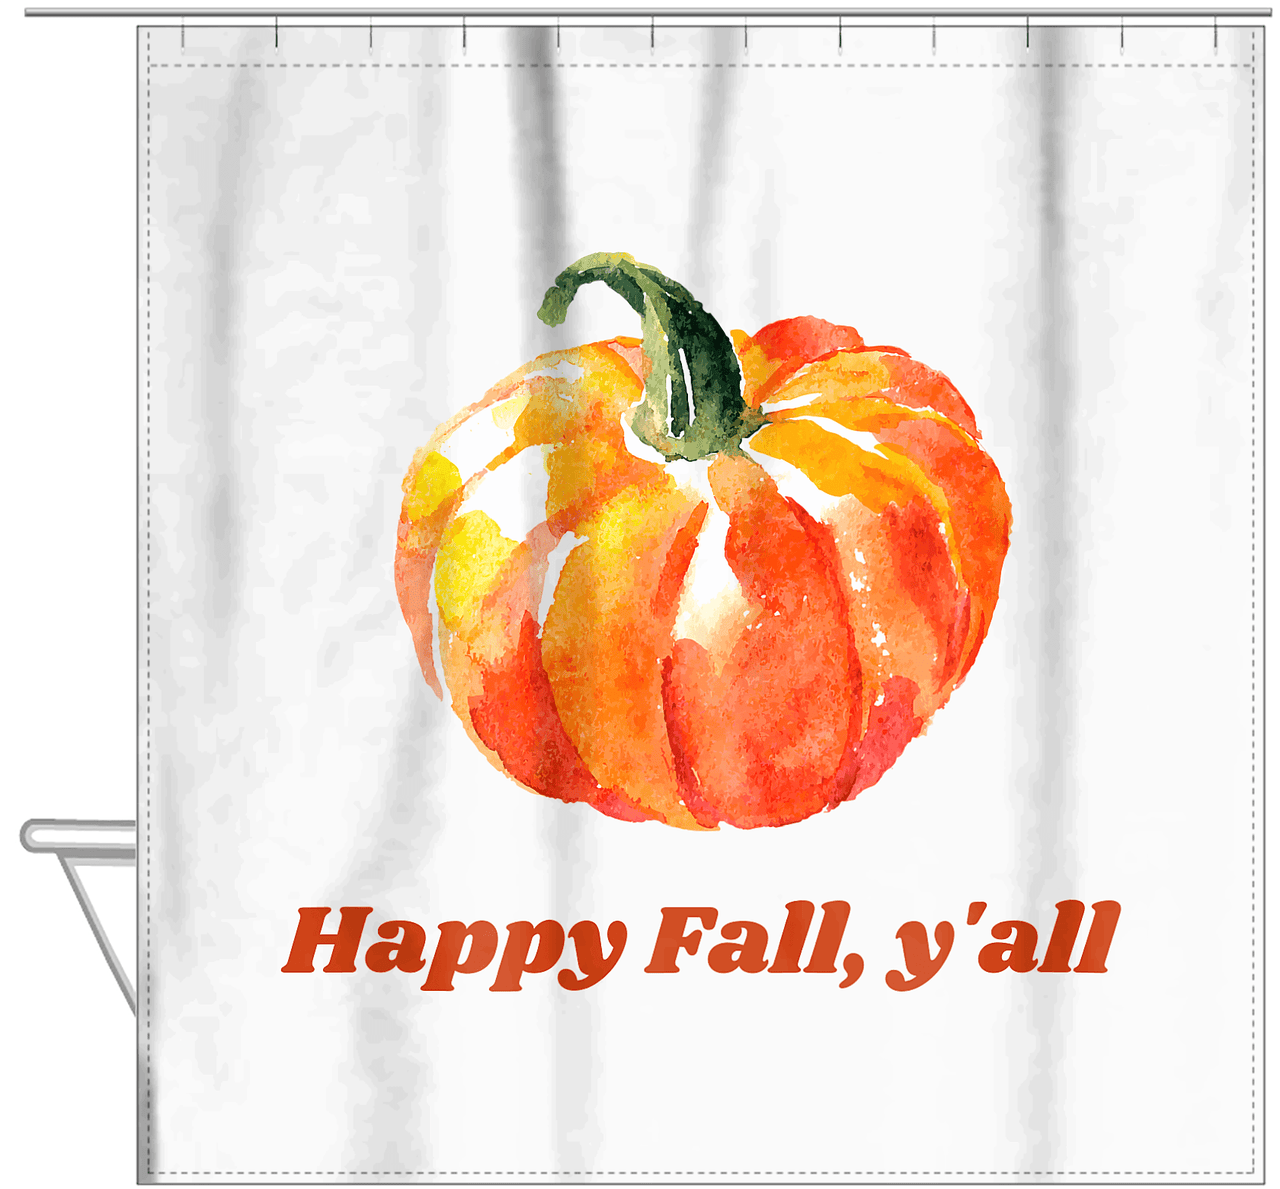 Personalized Pumpkin Shower Curtain - White Background - Text Below Pumpkin - Hanging View